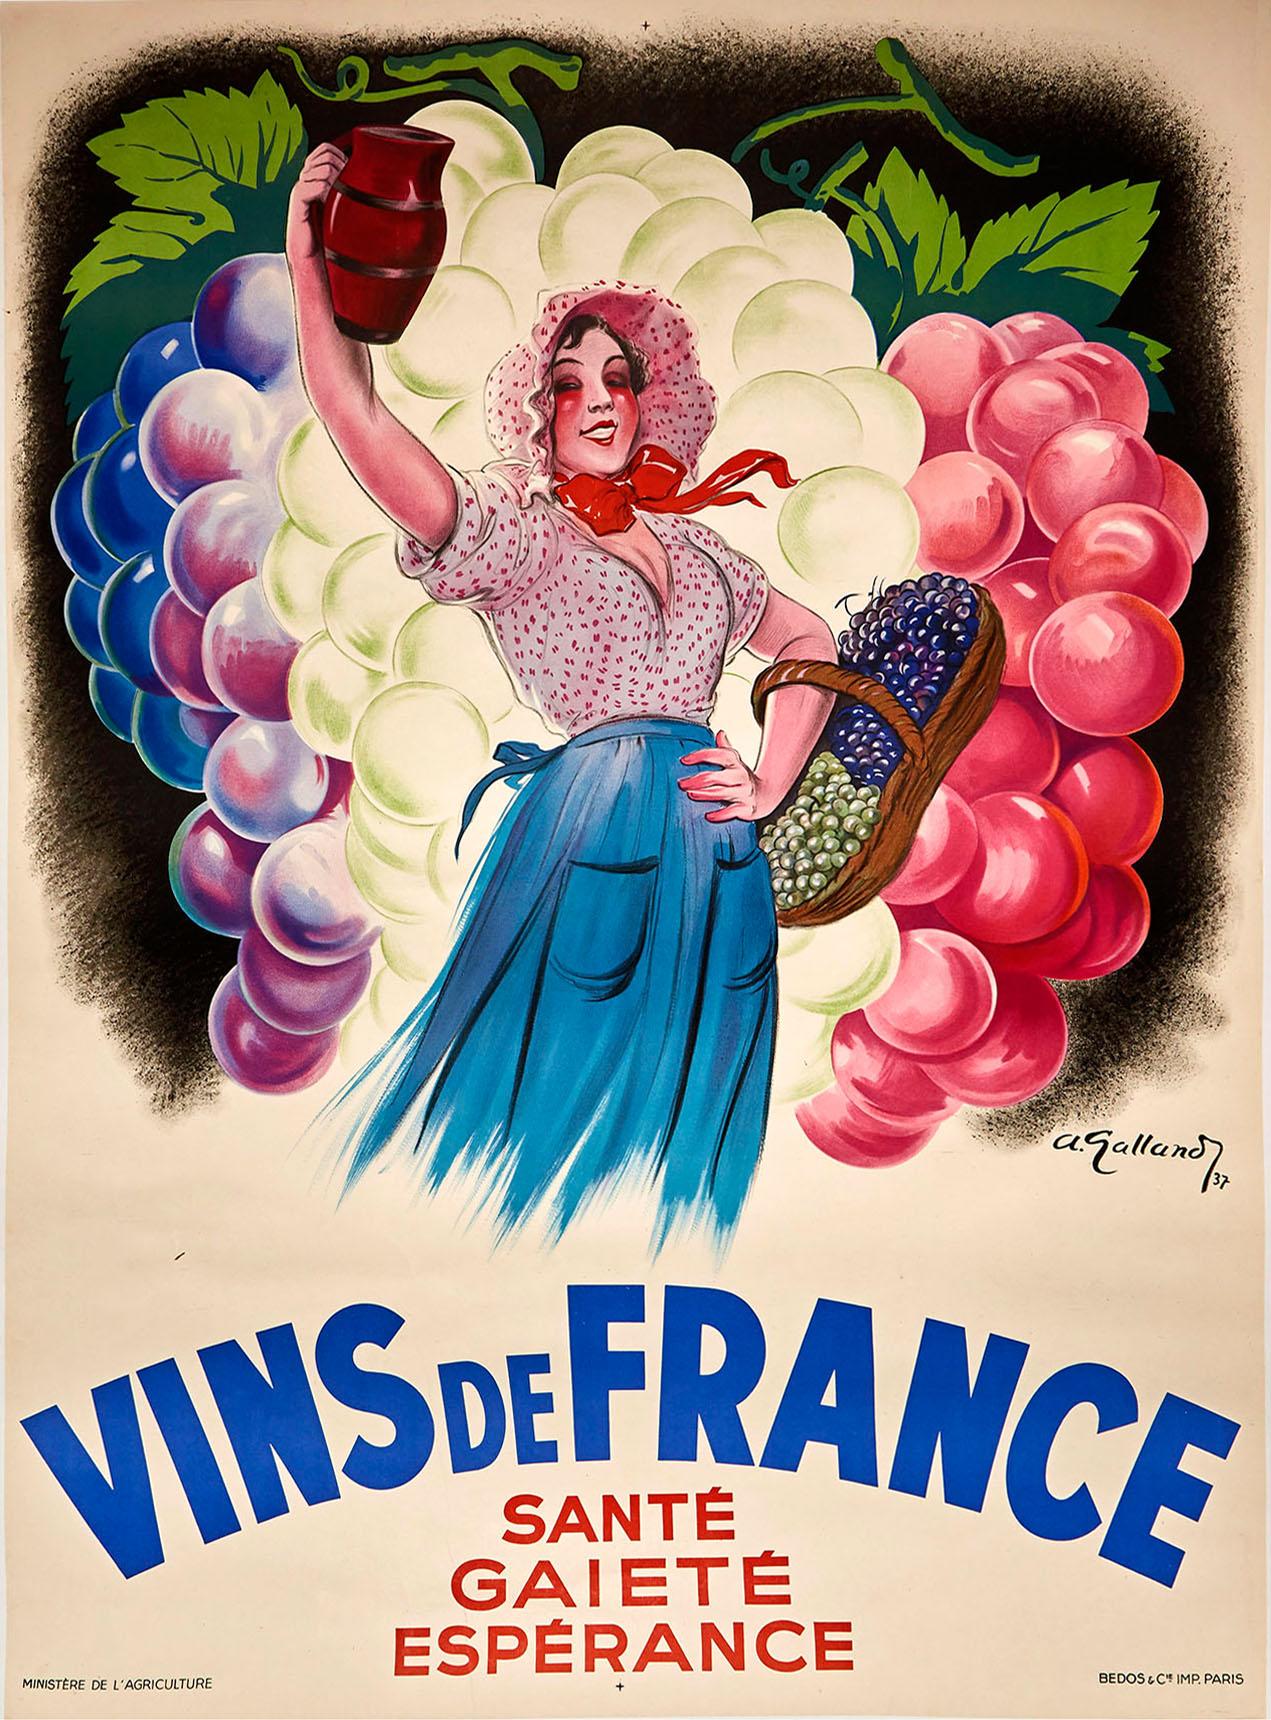 Andre Galland Print - Original Vintage Poster Vins De France Sante Gaiete Esperance French Wine Cheer